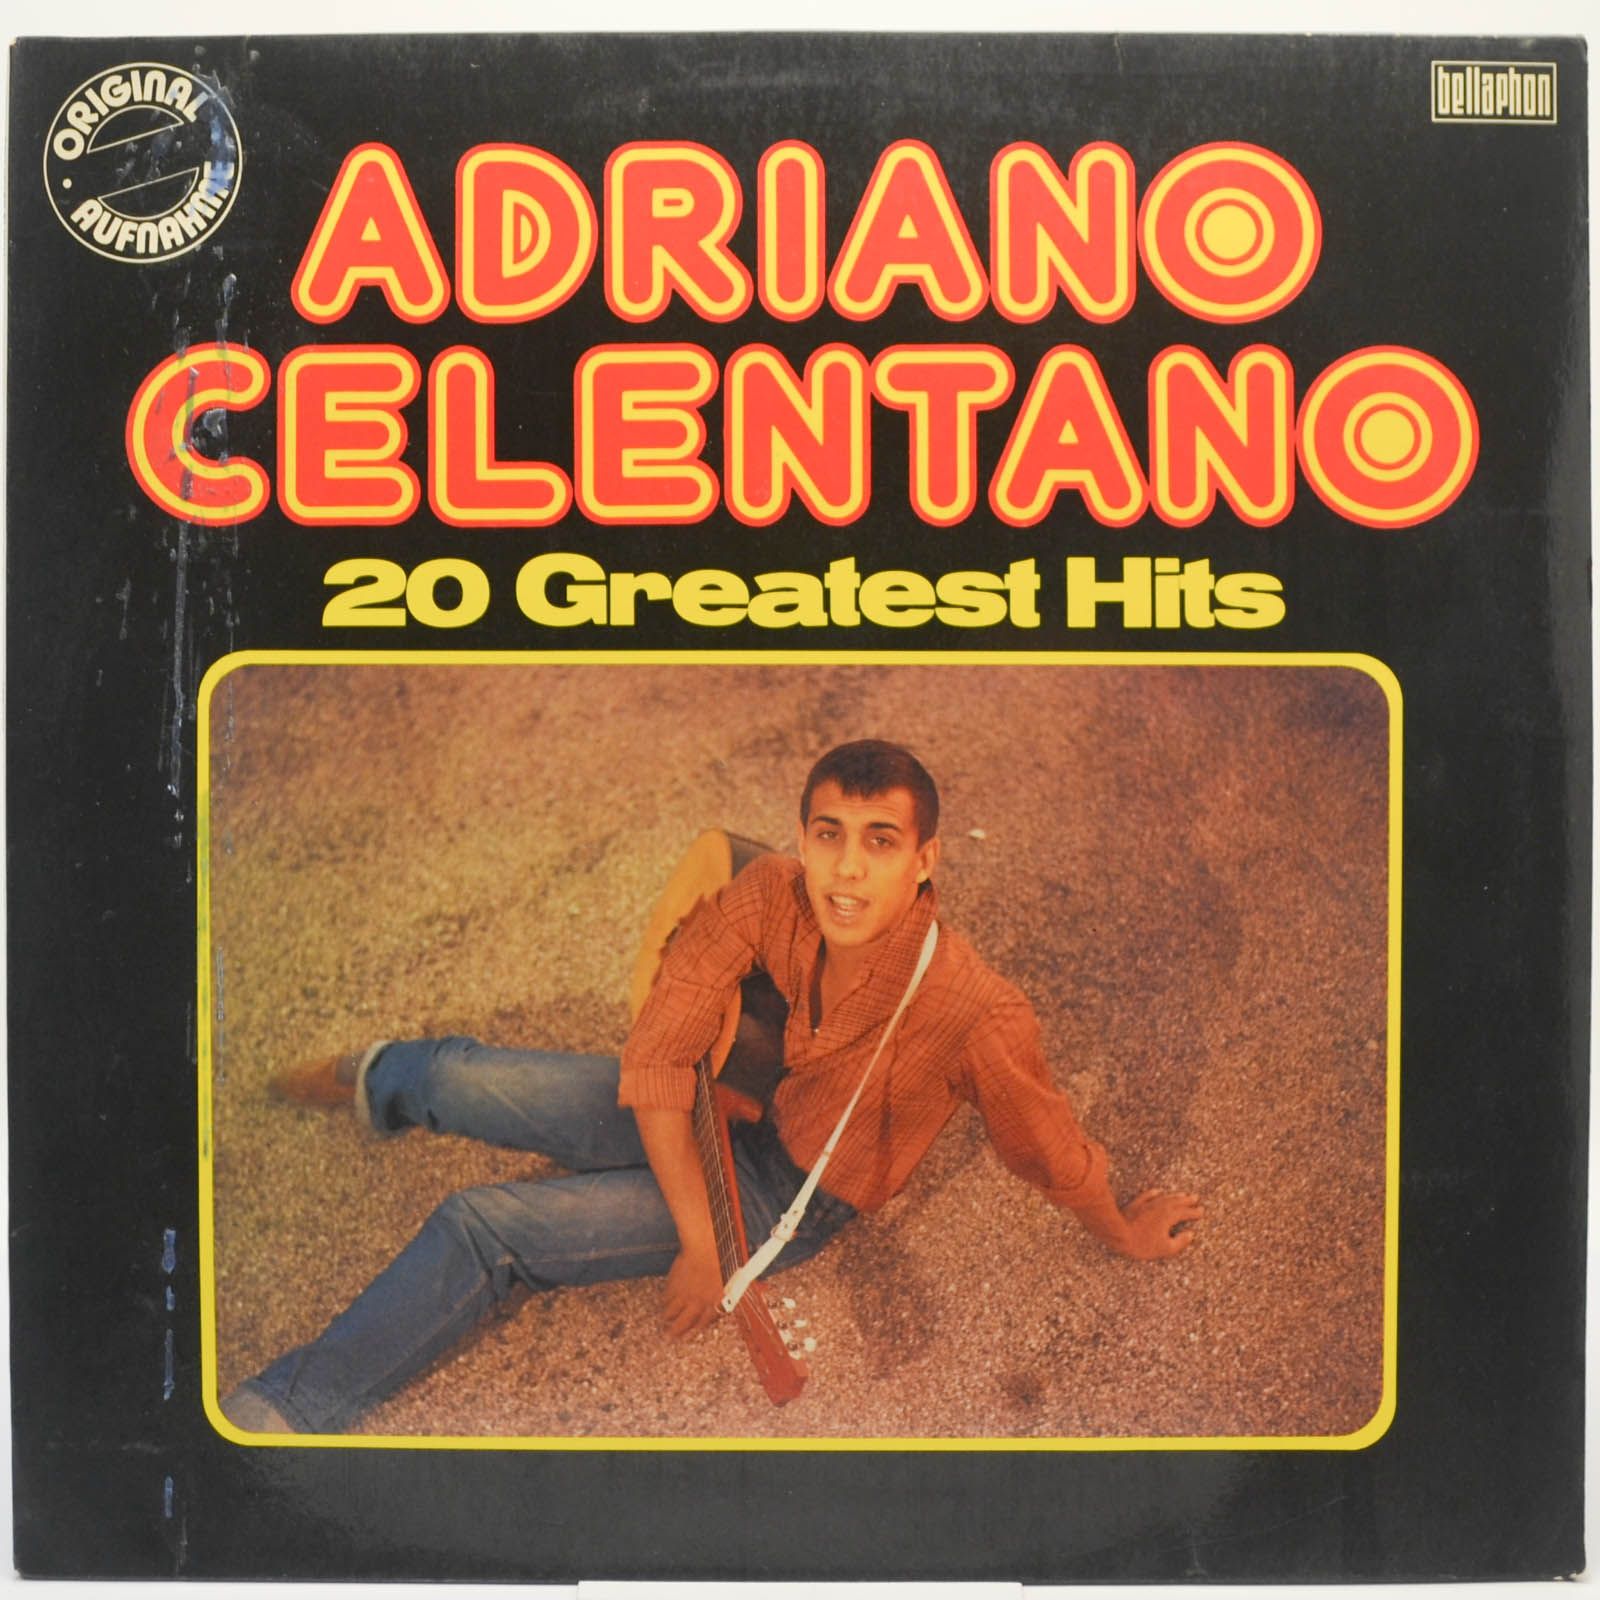 Adriano Celentano — 20 Greatest Hits, 1974